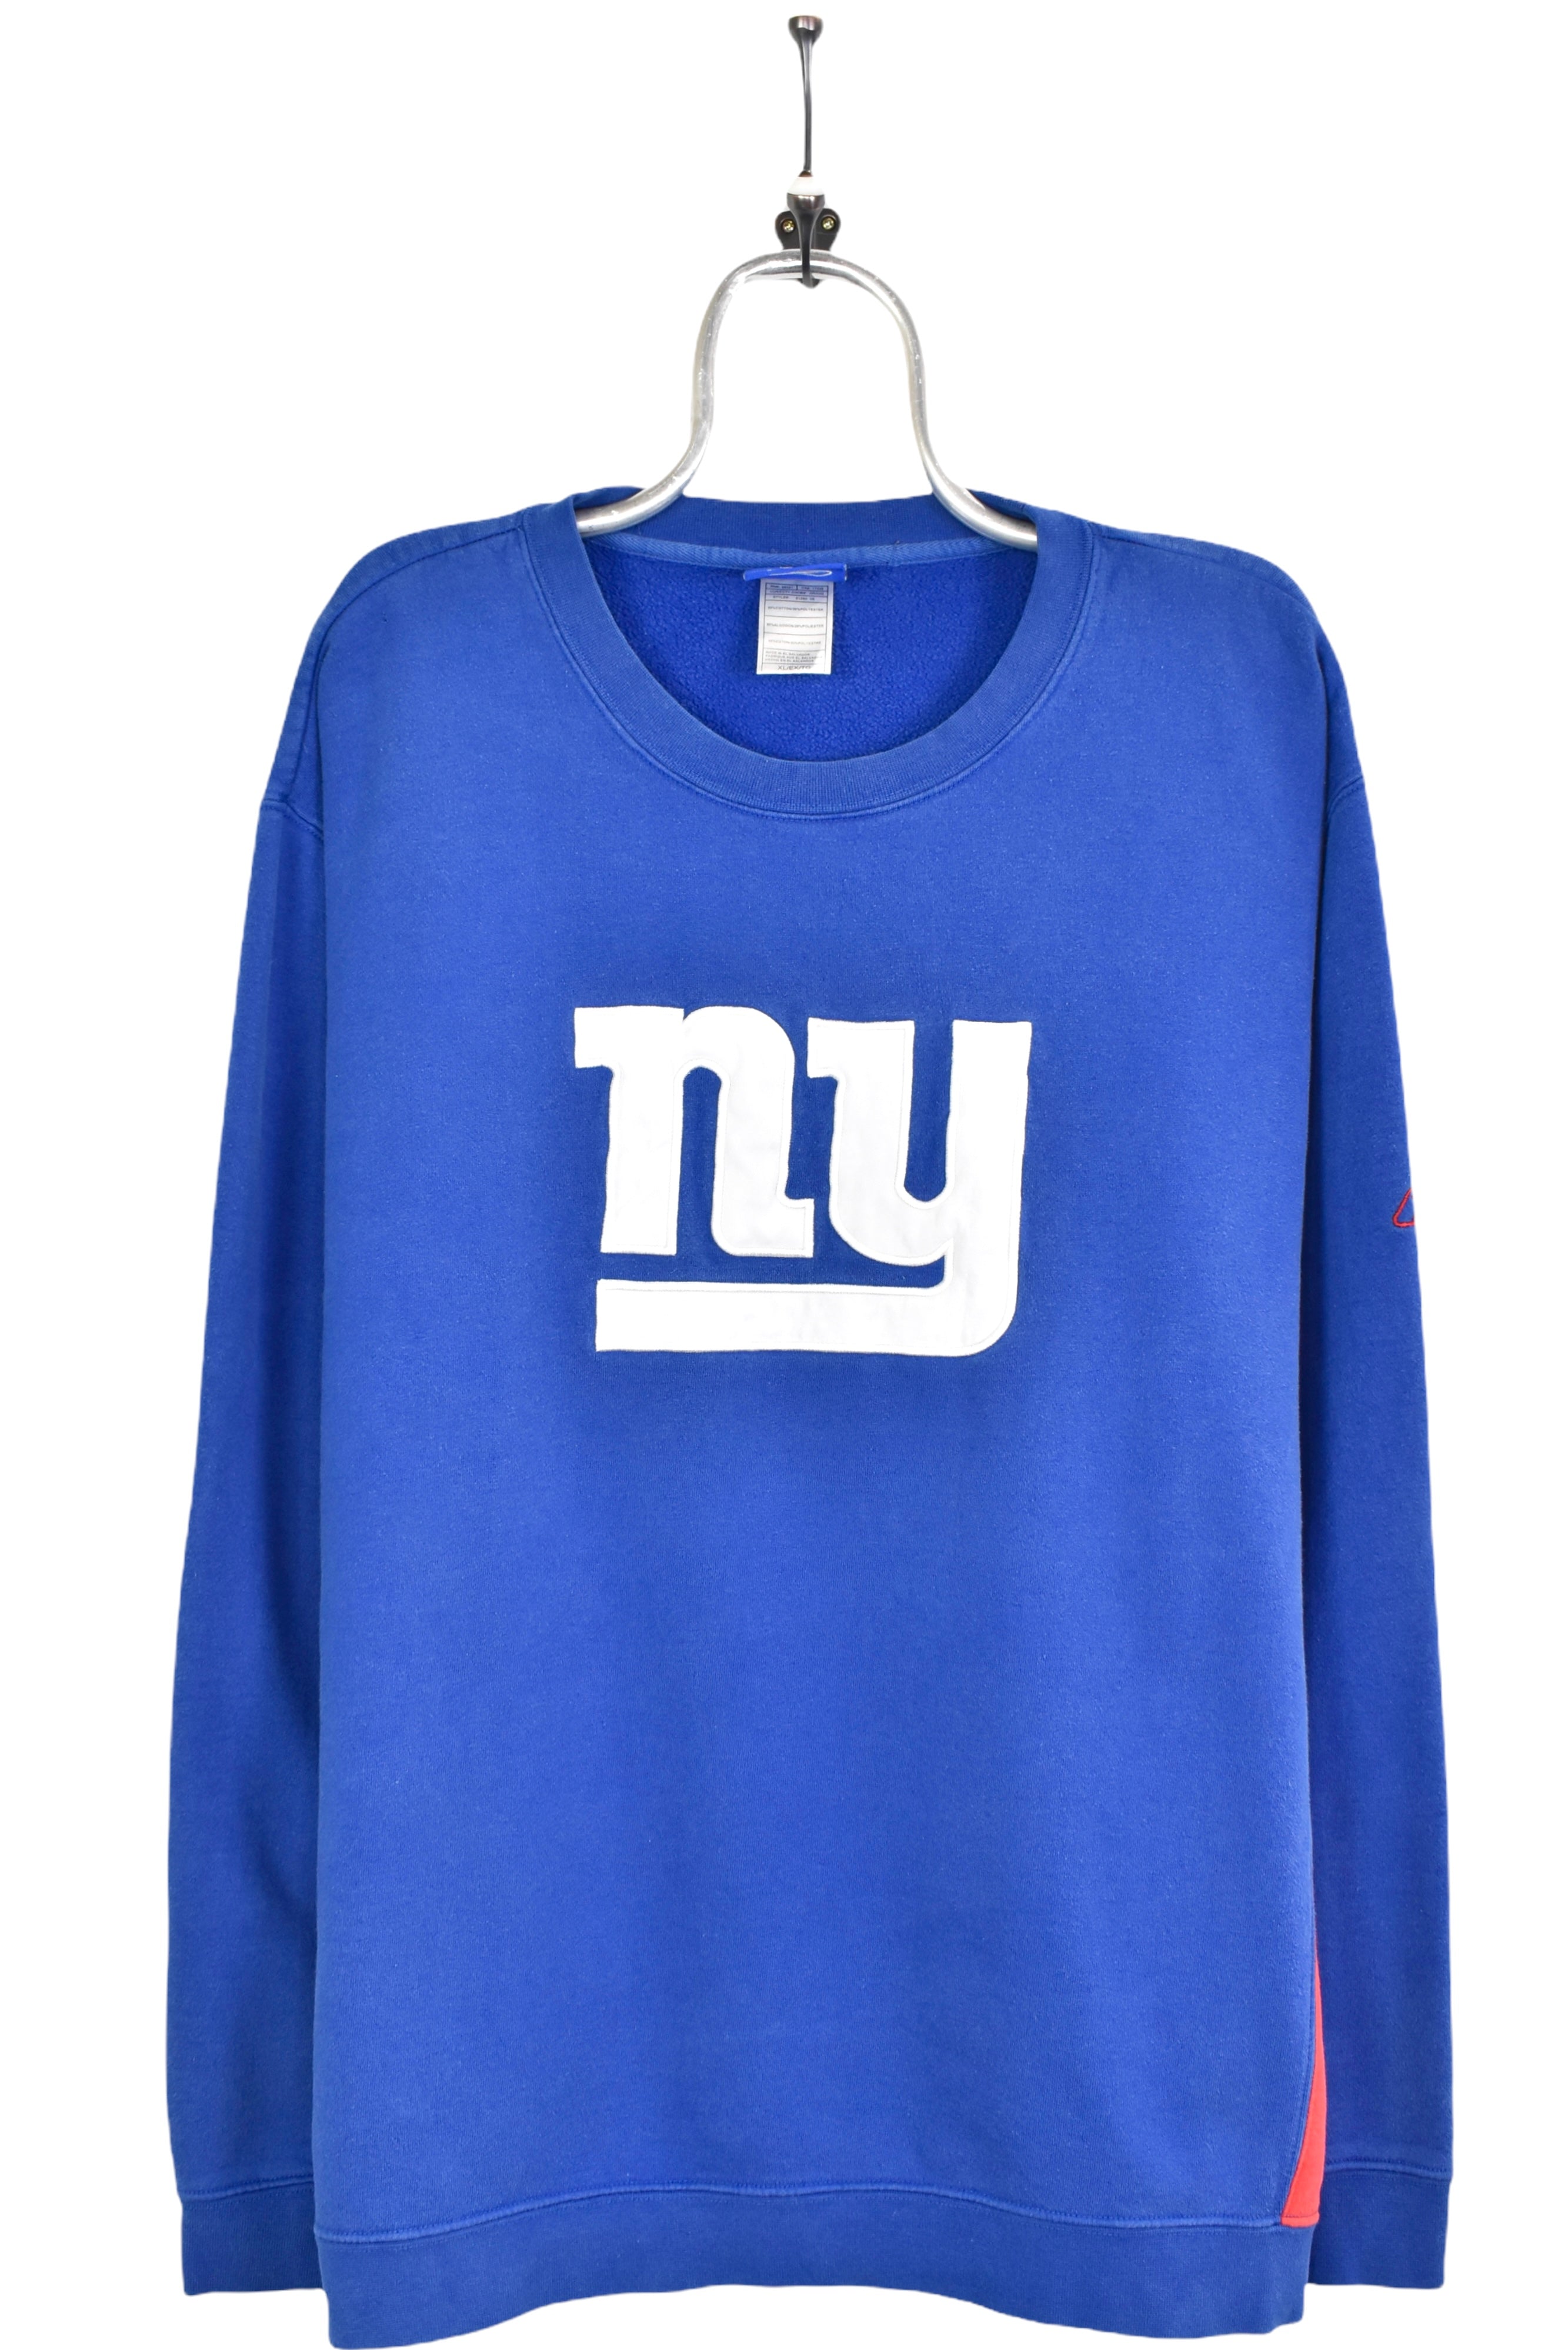 Vintage NFL New England Patriots embroidered blue sweatshirt | XXXL PRO SPORT